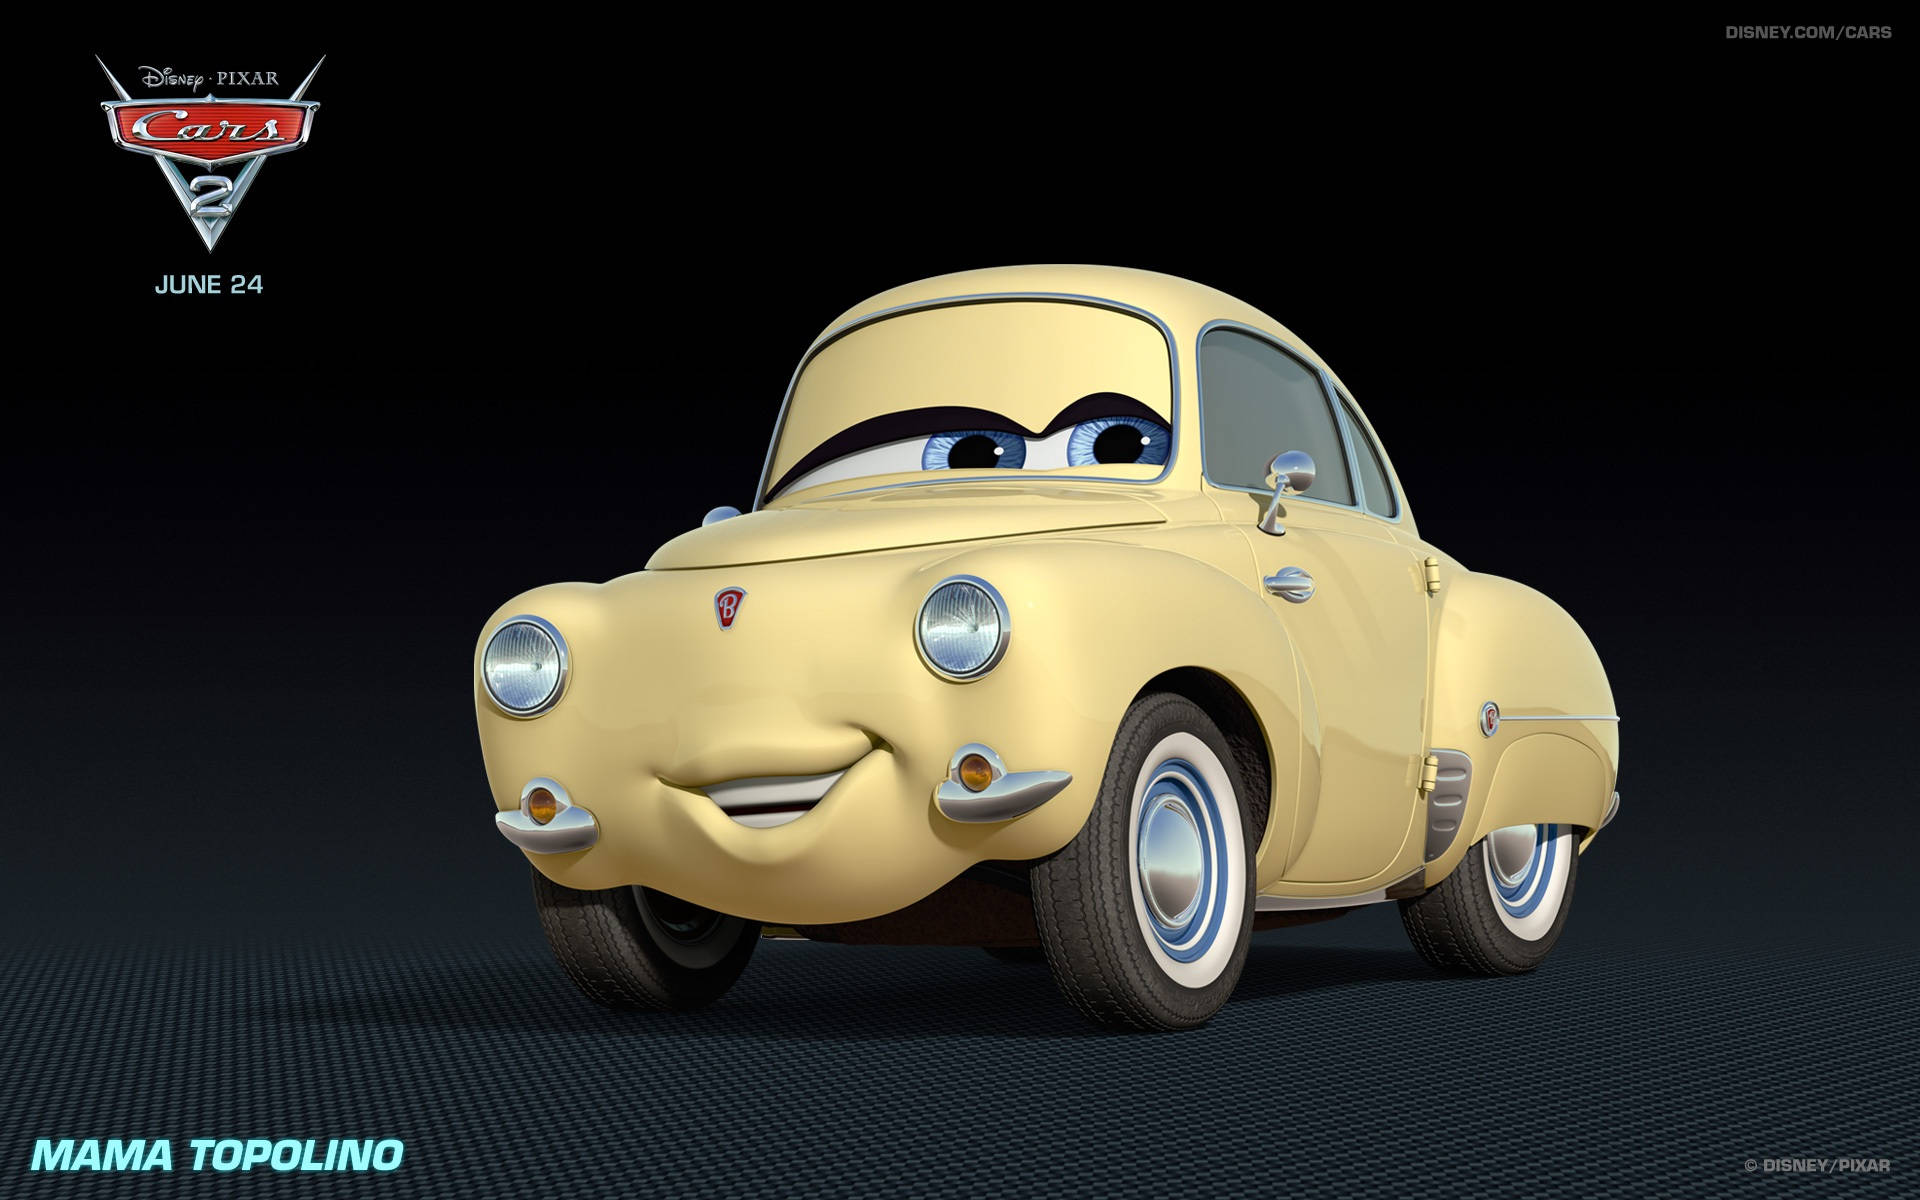 Disney Pixar Mama Topolino Cars 2 Background